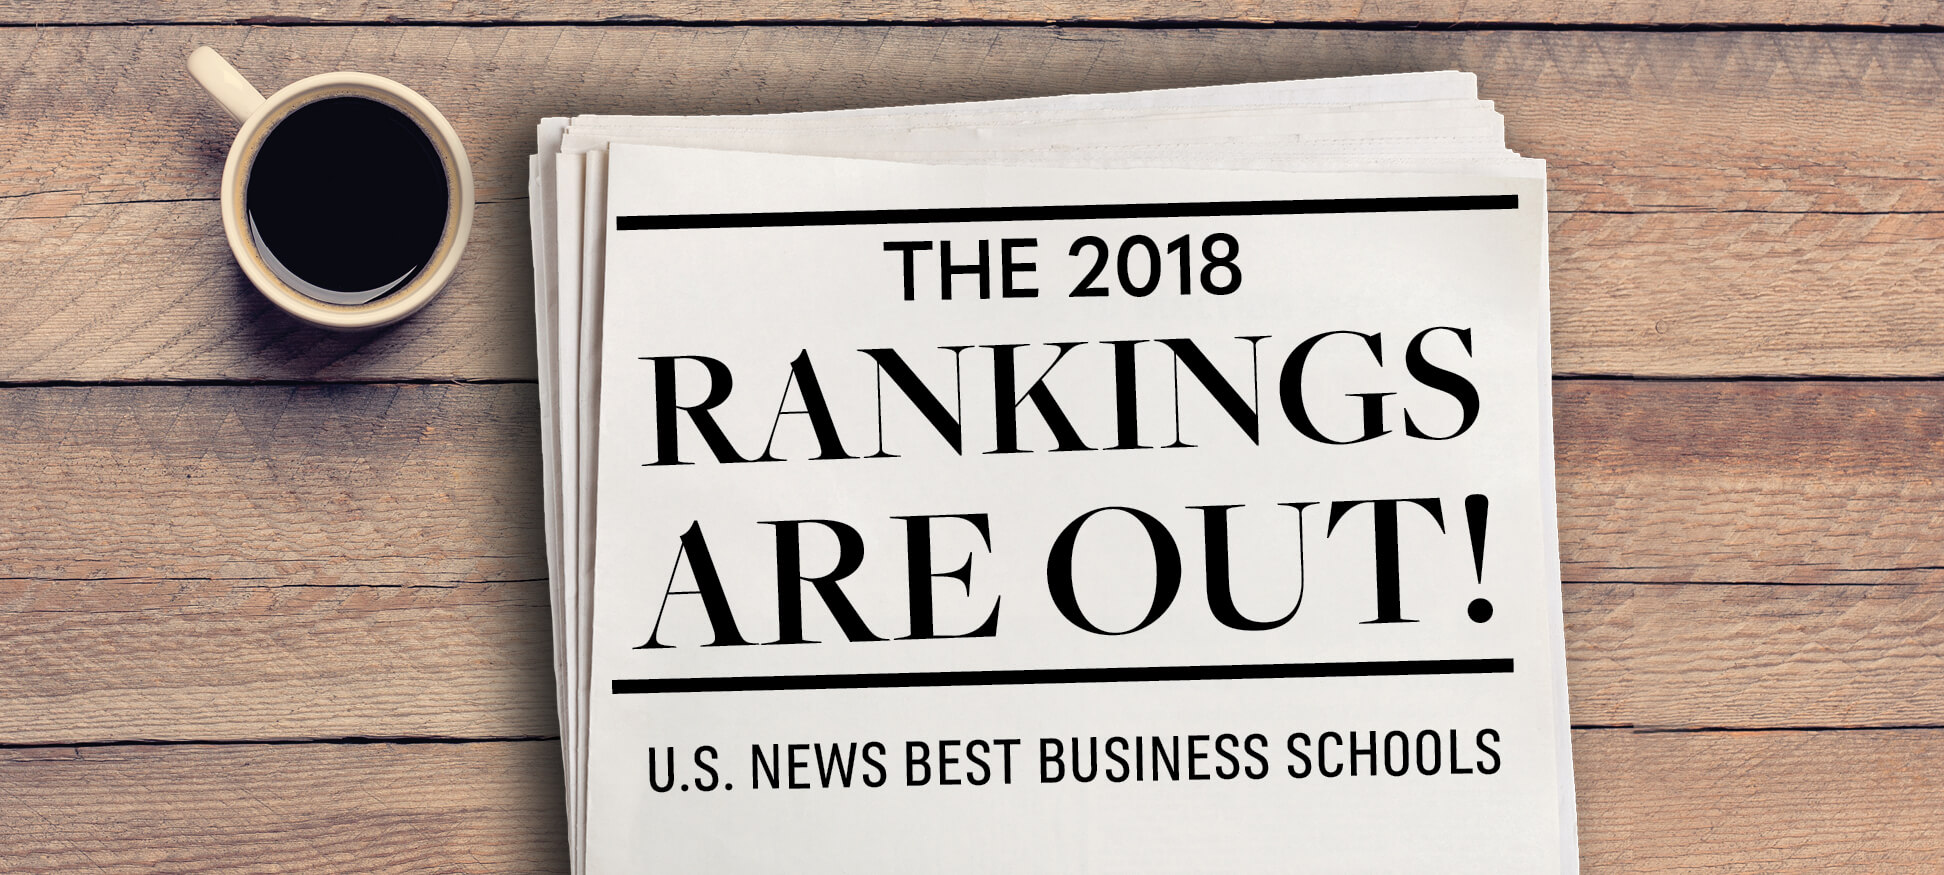 New york university us news and world report ranking